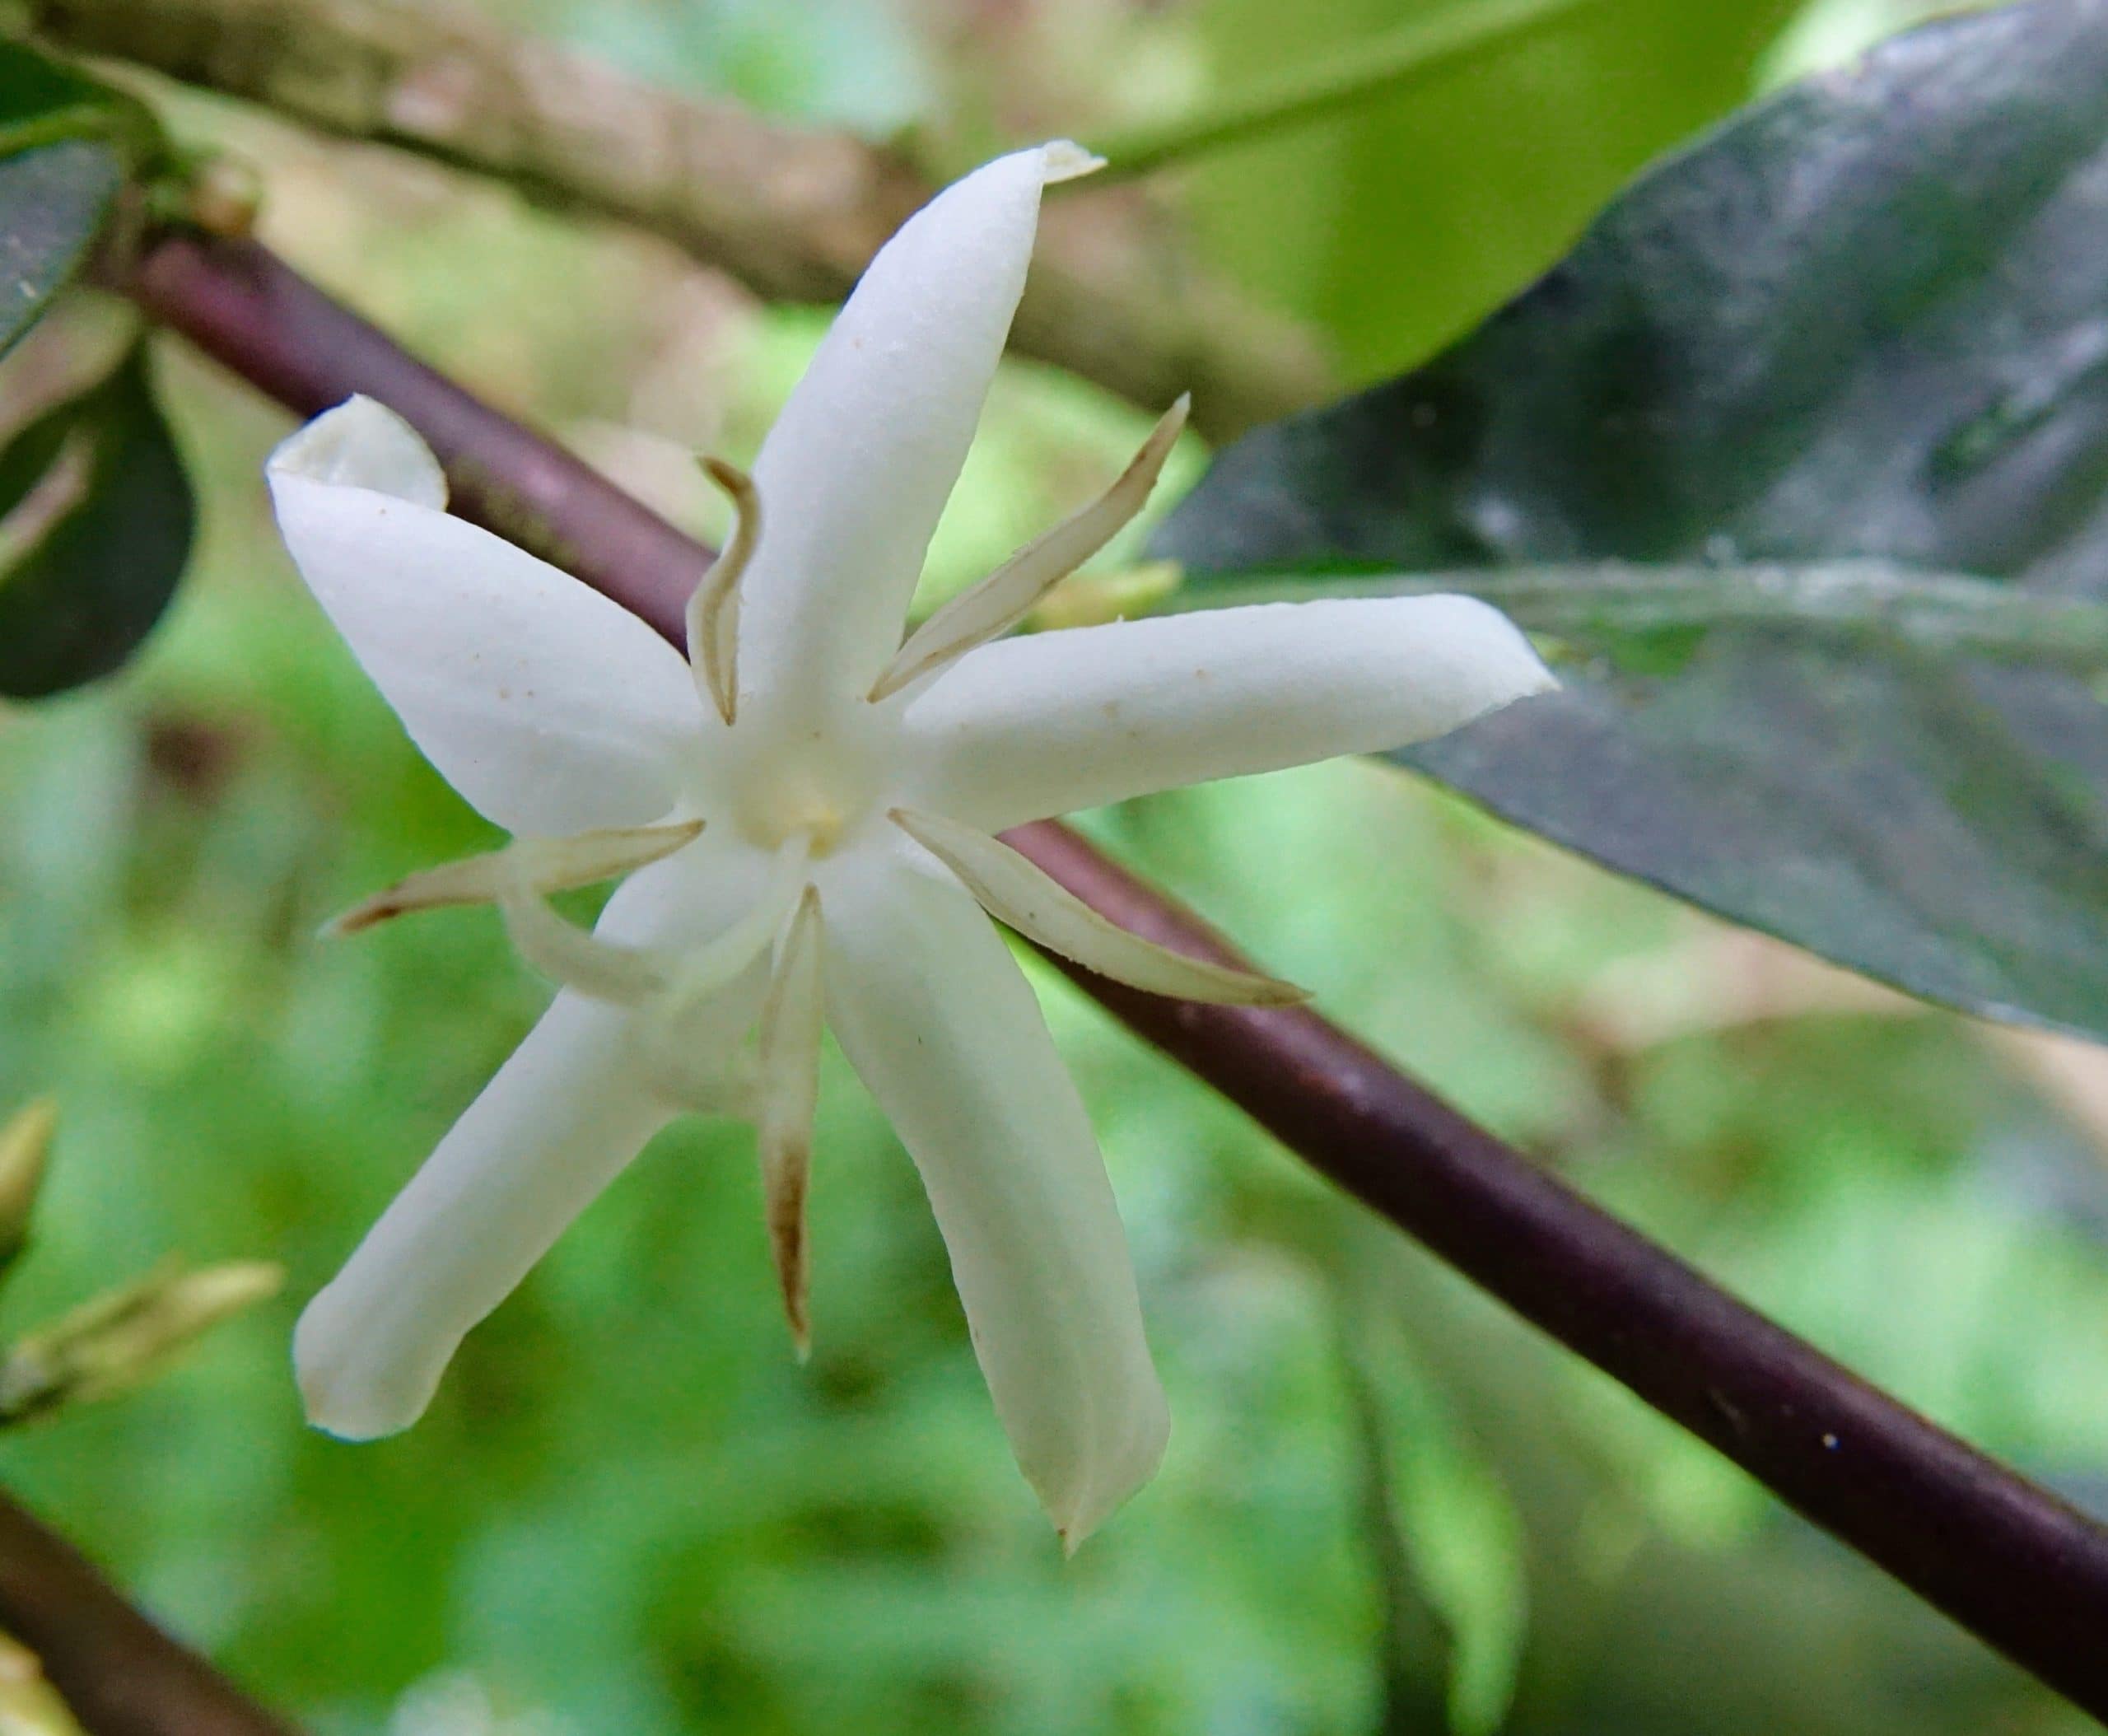 A coffee blossom